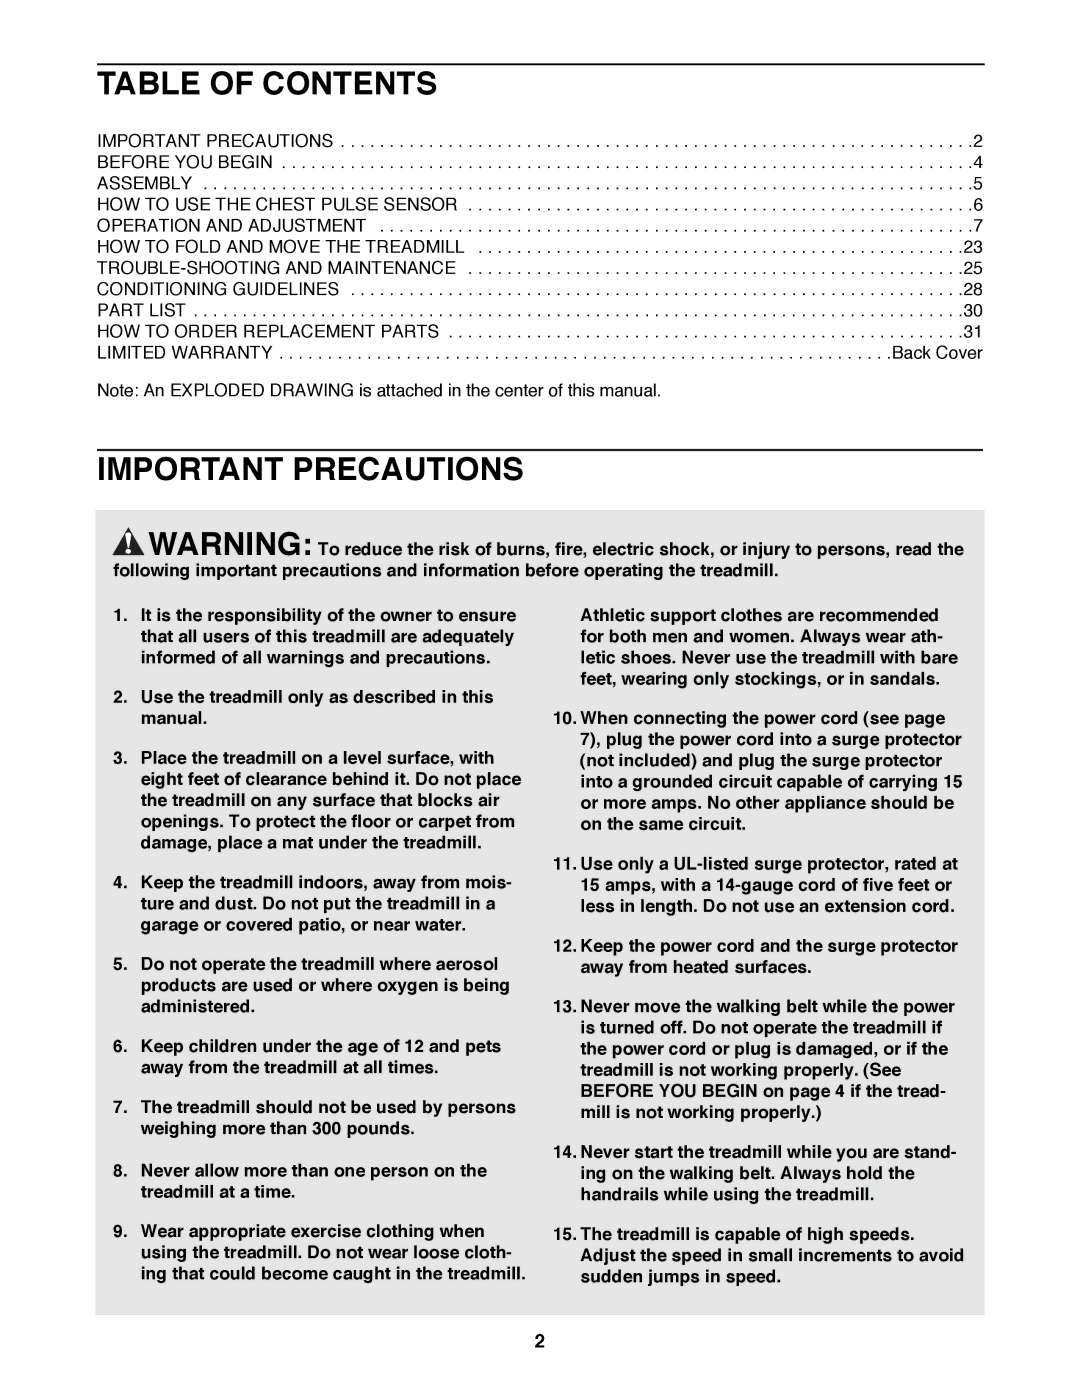 Healthrider HRTL16992 manual Table of Contents, Important Precautions 